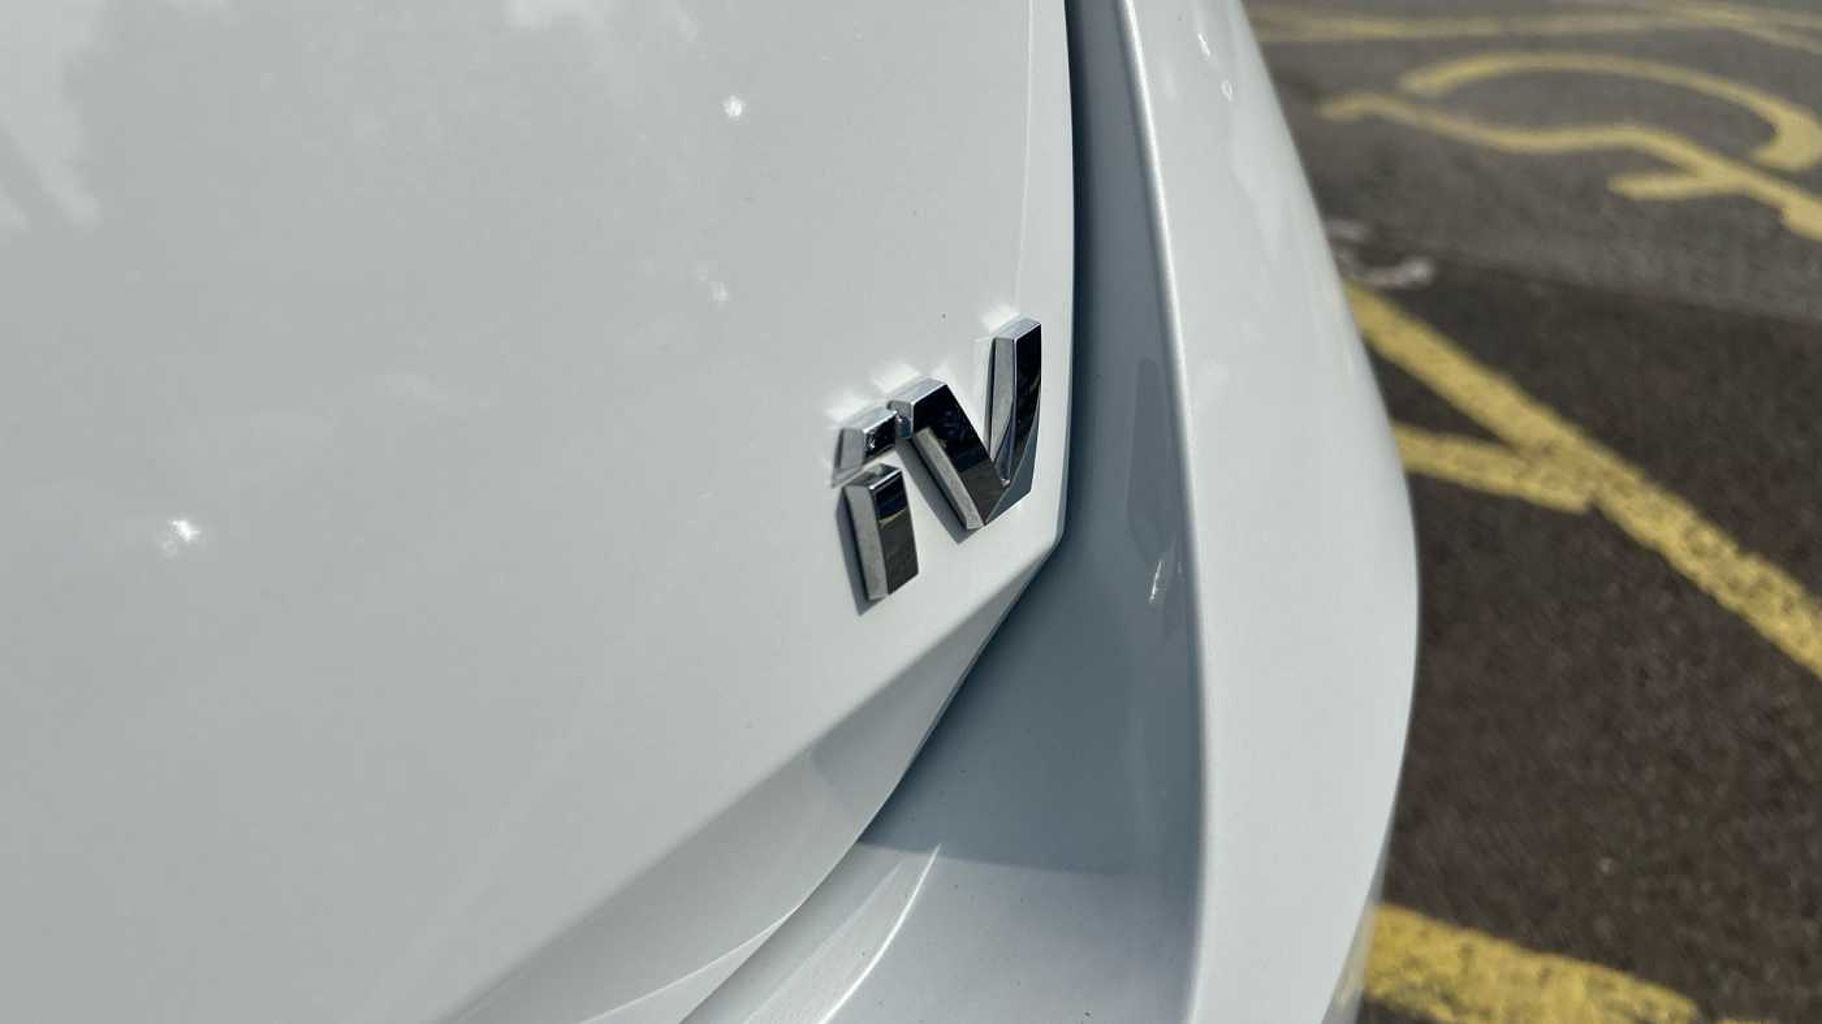 SKODA Octavia Hatchback 1.4 TSI  SE L iV (150ps) DSG